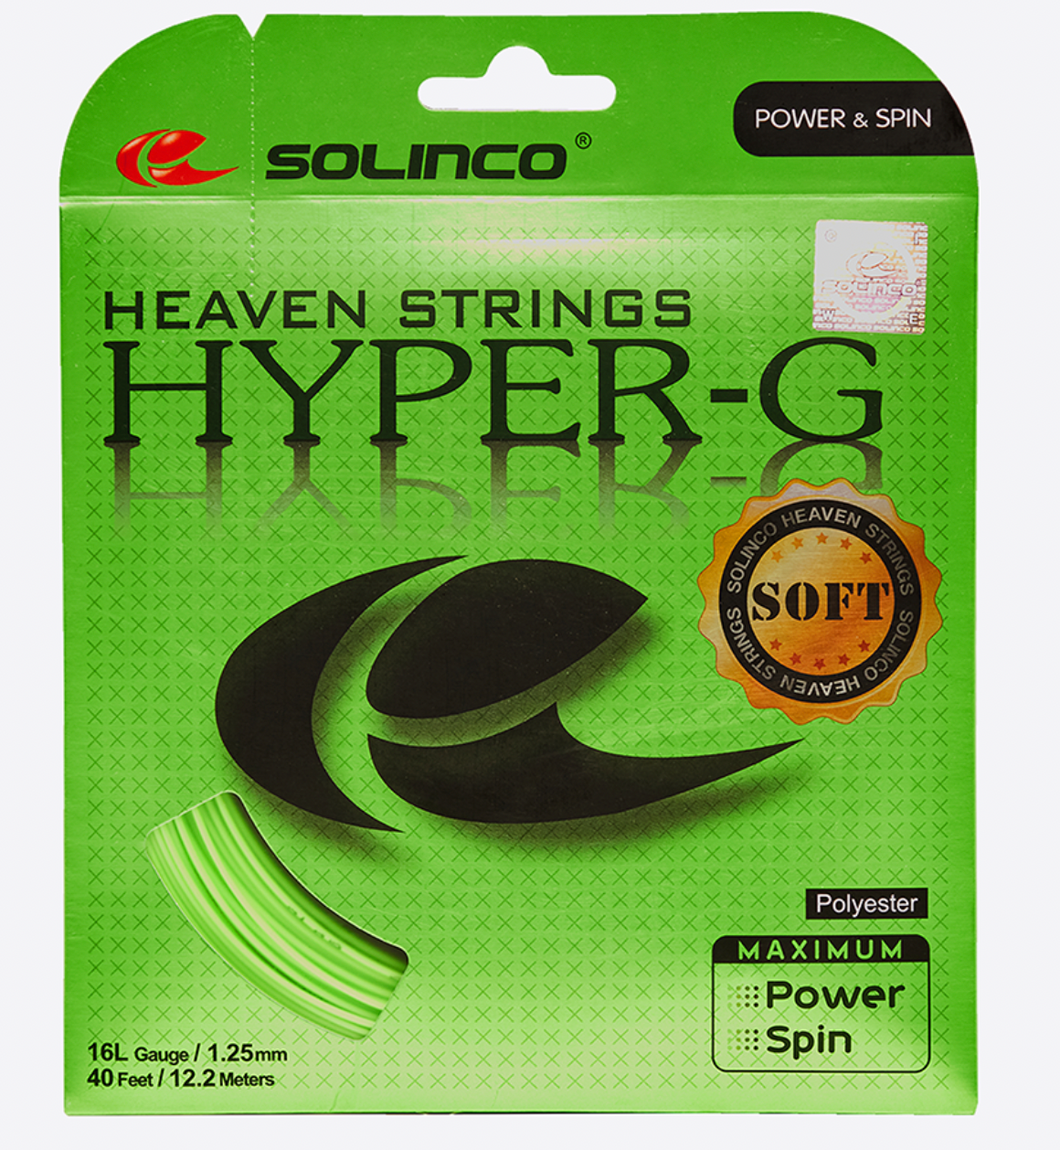 Solinco Hyper G Soft Tennis String - I LOVE MY DOUBLES PARTNER!!!